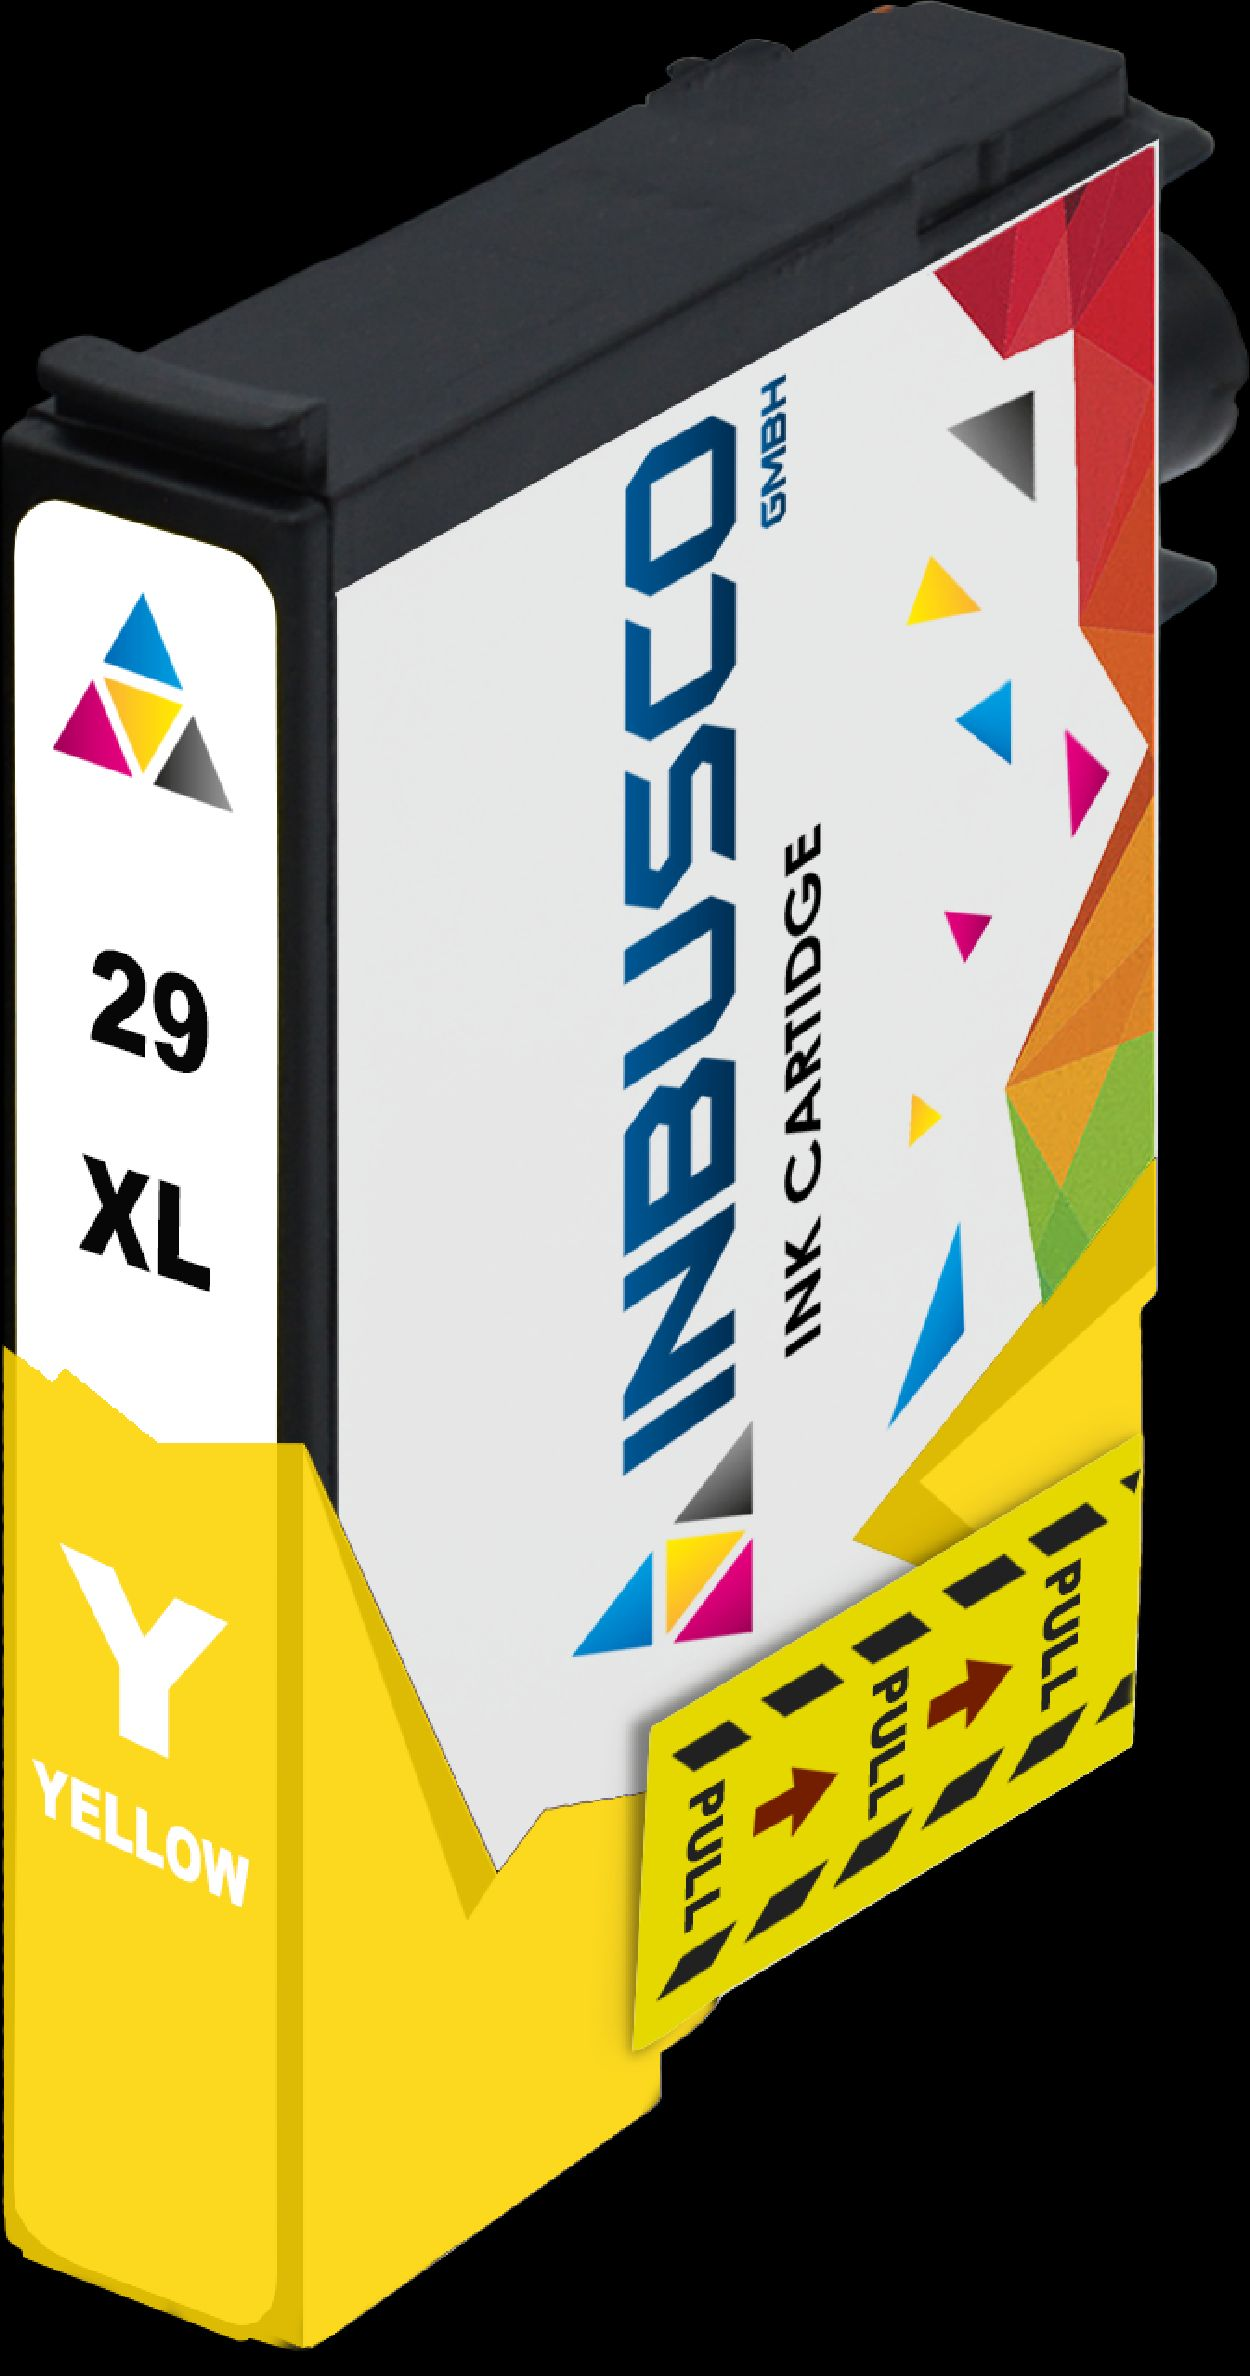 INBUSCO / Mehrfarbig XL (2991-2994XLVAR1-14) KUBIS 2991-2994 VAR1-14 Tintenpatrone